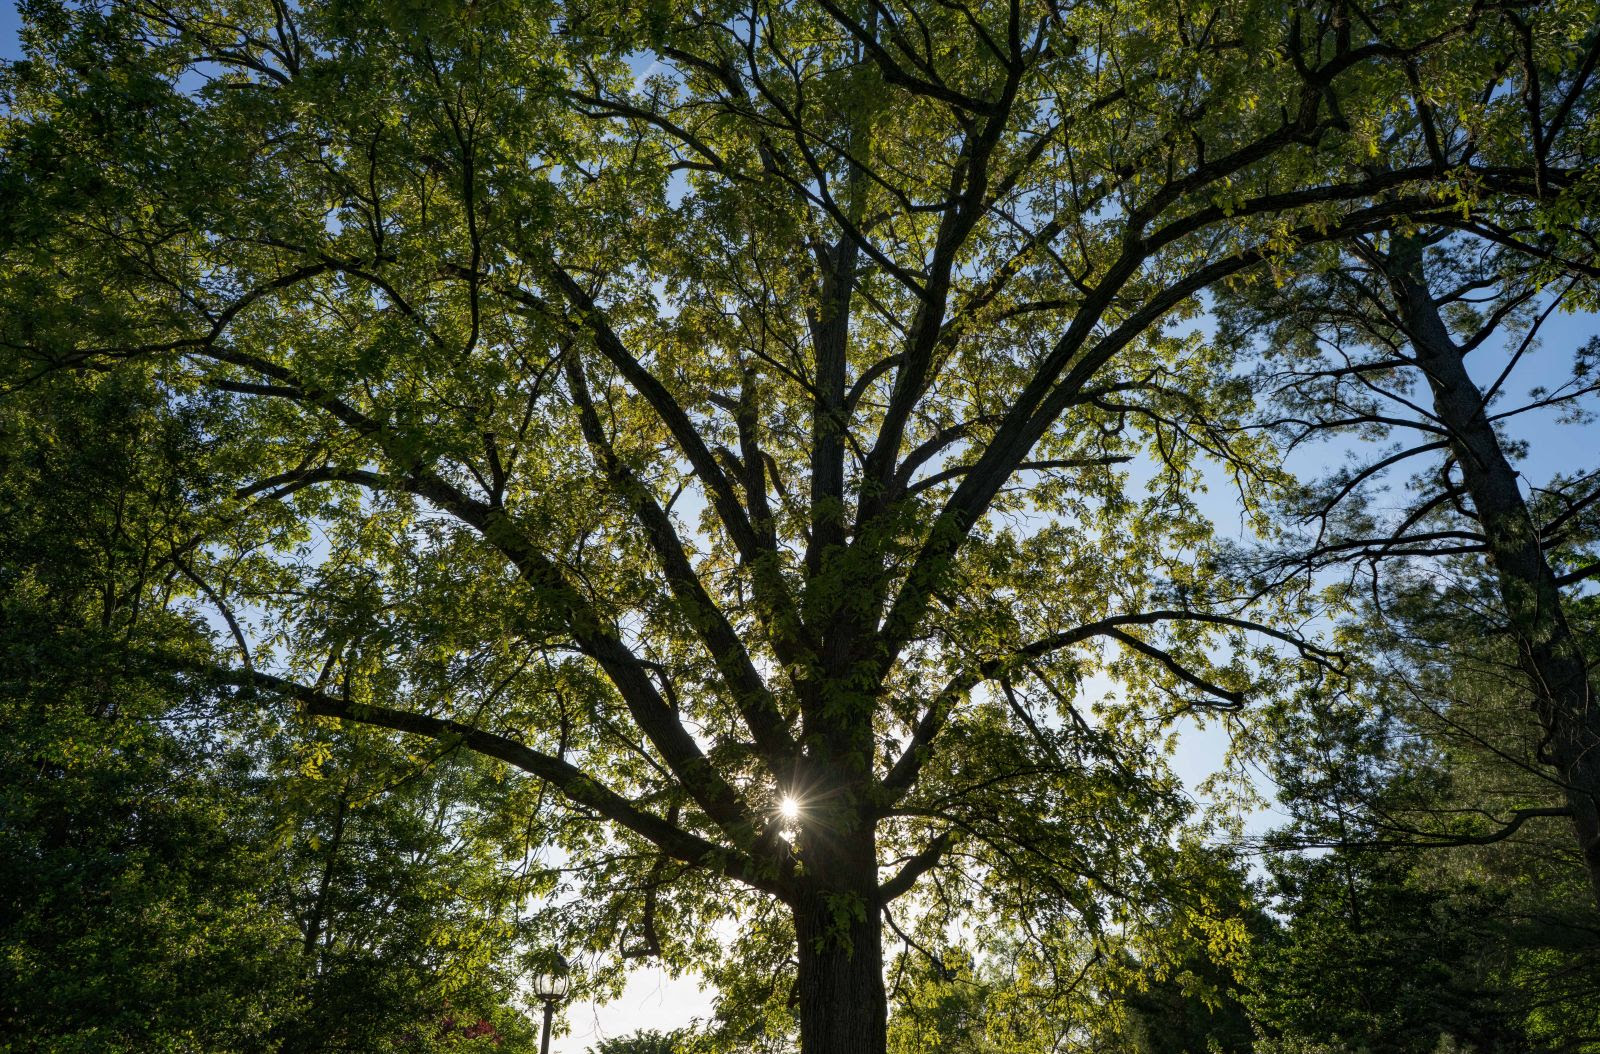 Canopy of the Morris Arboretum specimen in the morning light.